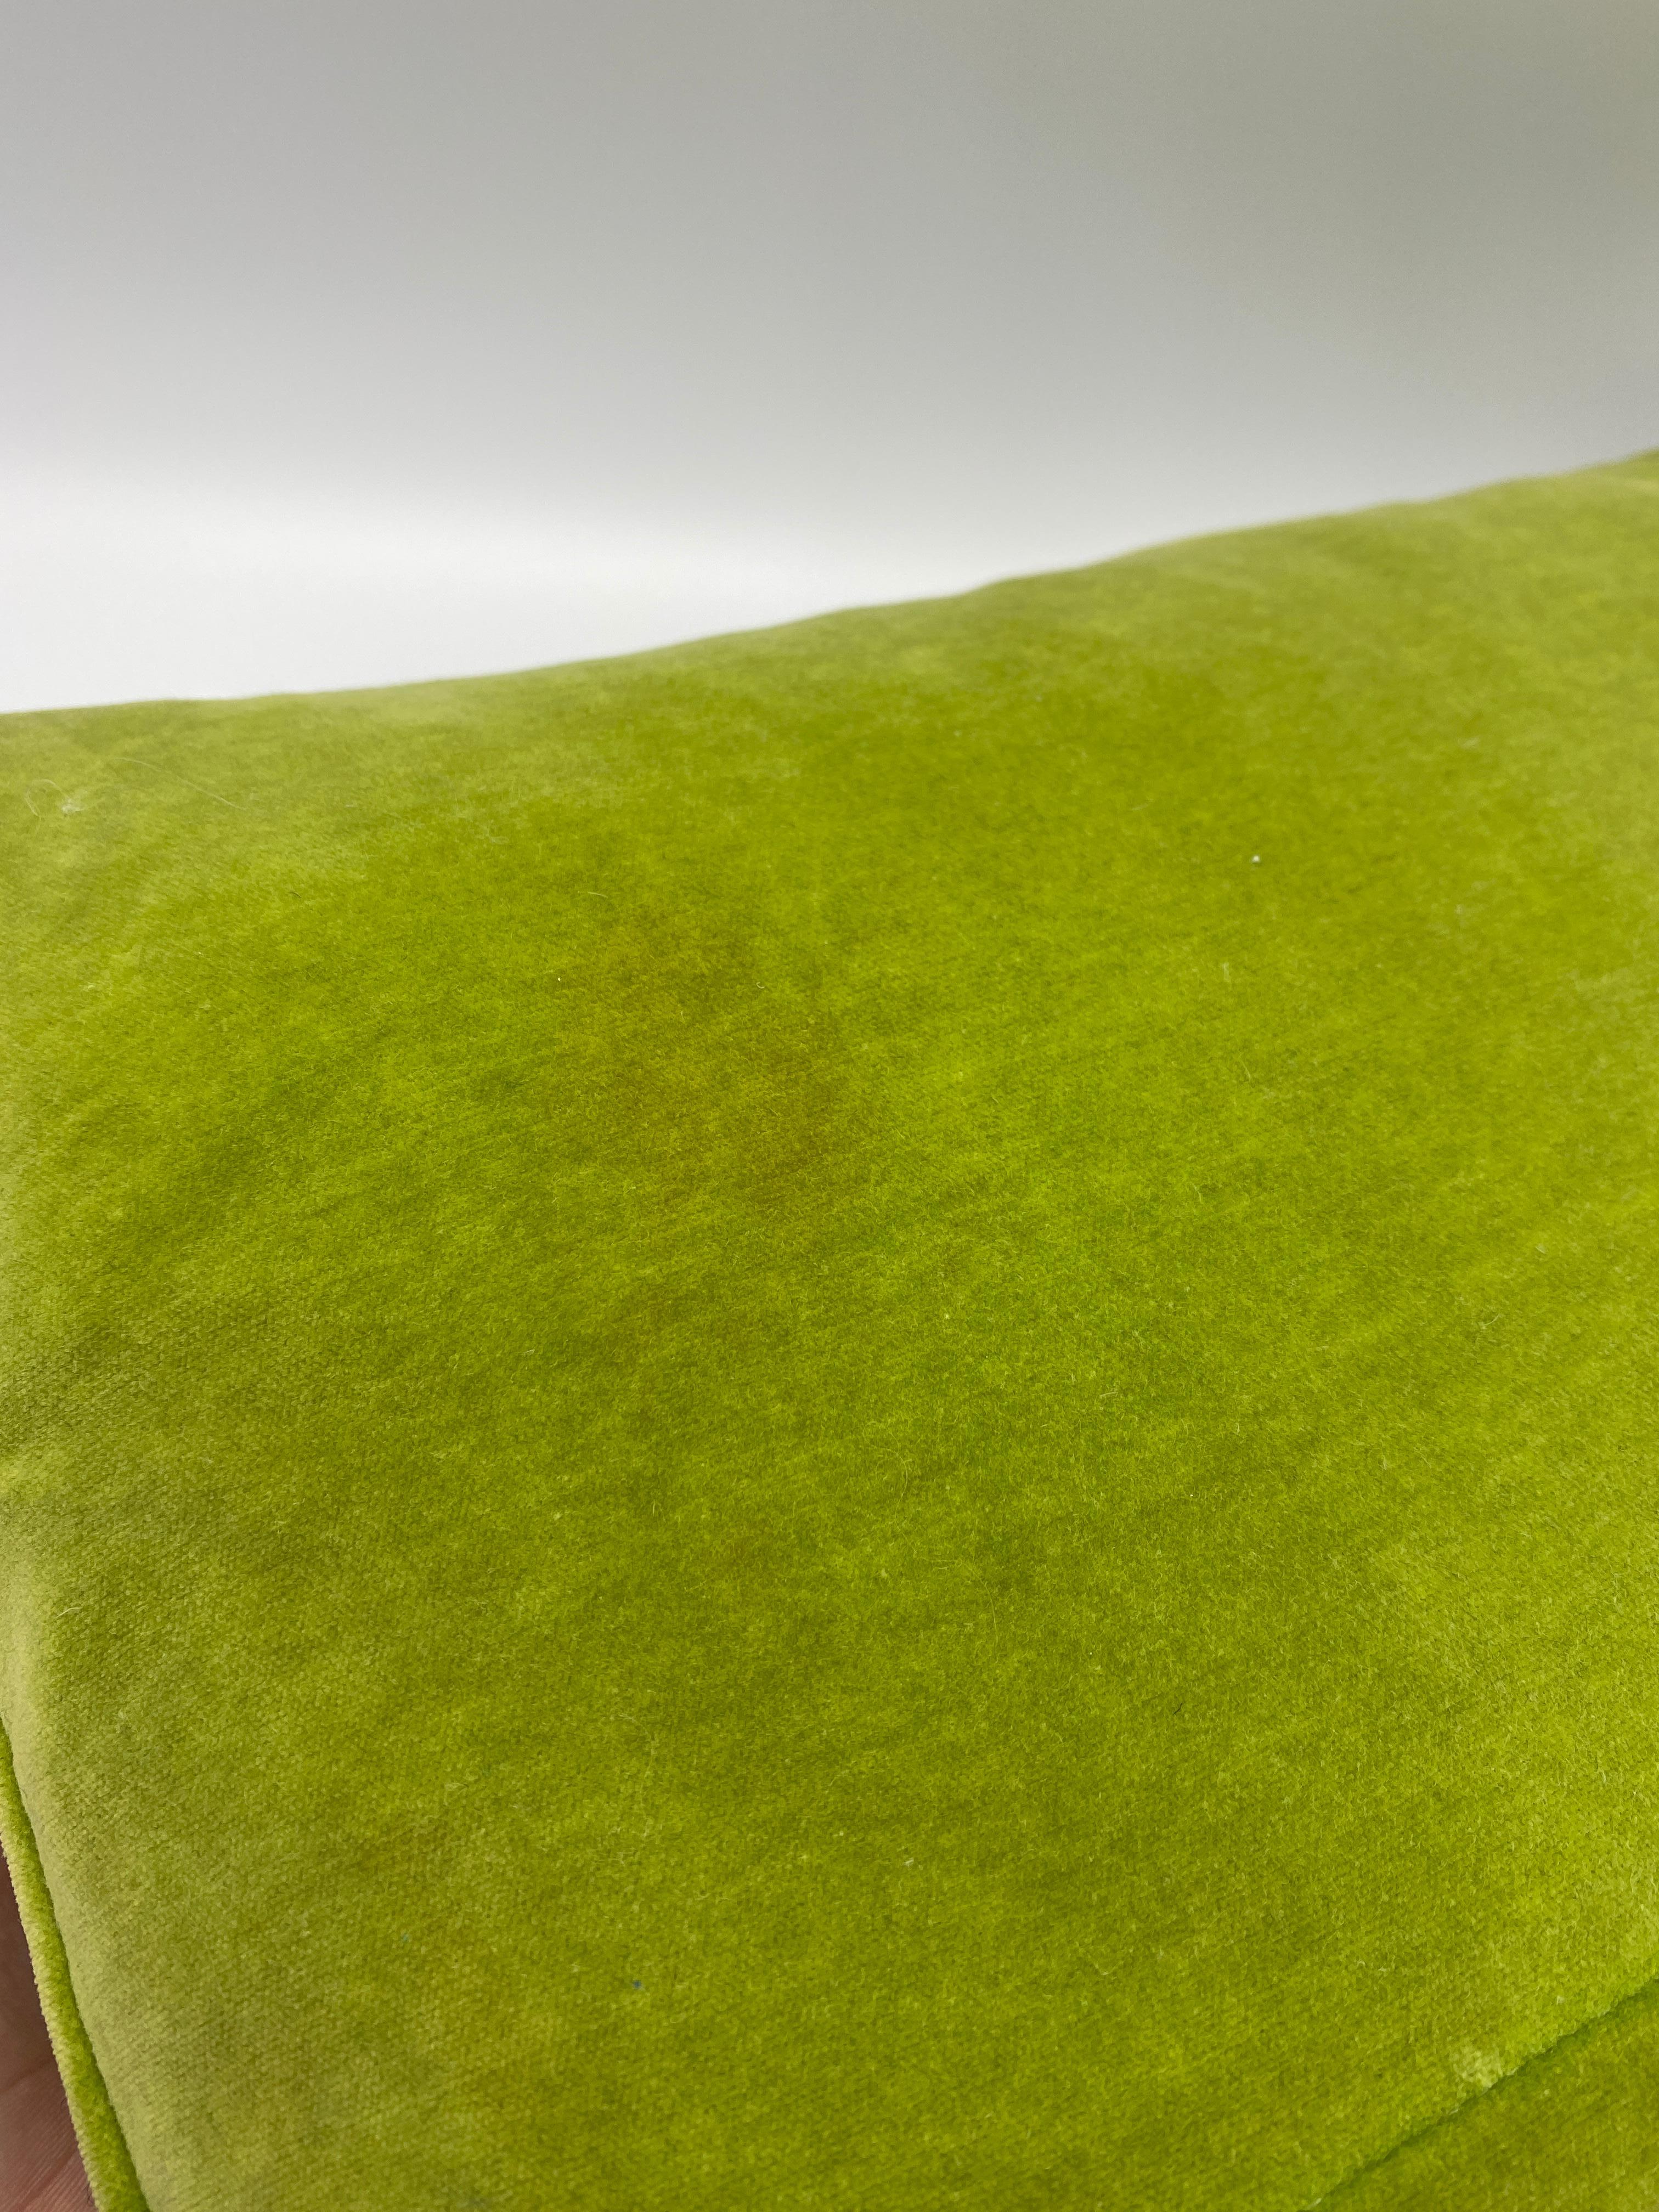 Jonathan Adler Blue, Green, and White Union Jack Needlepoint Pillow 2